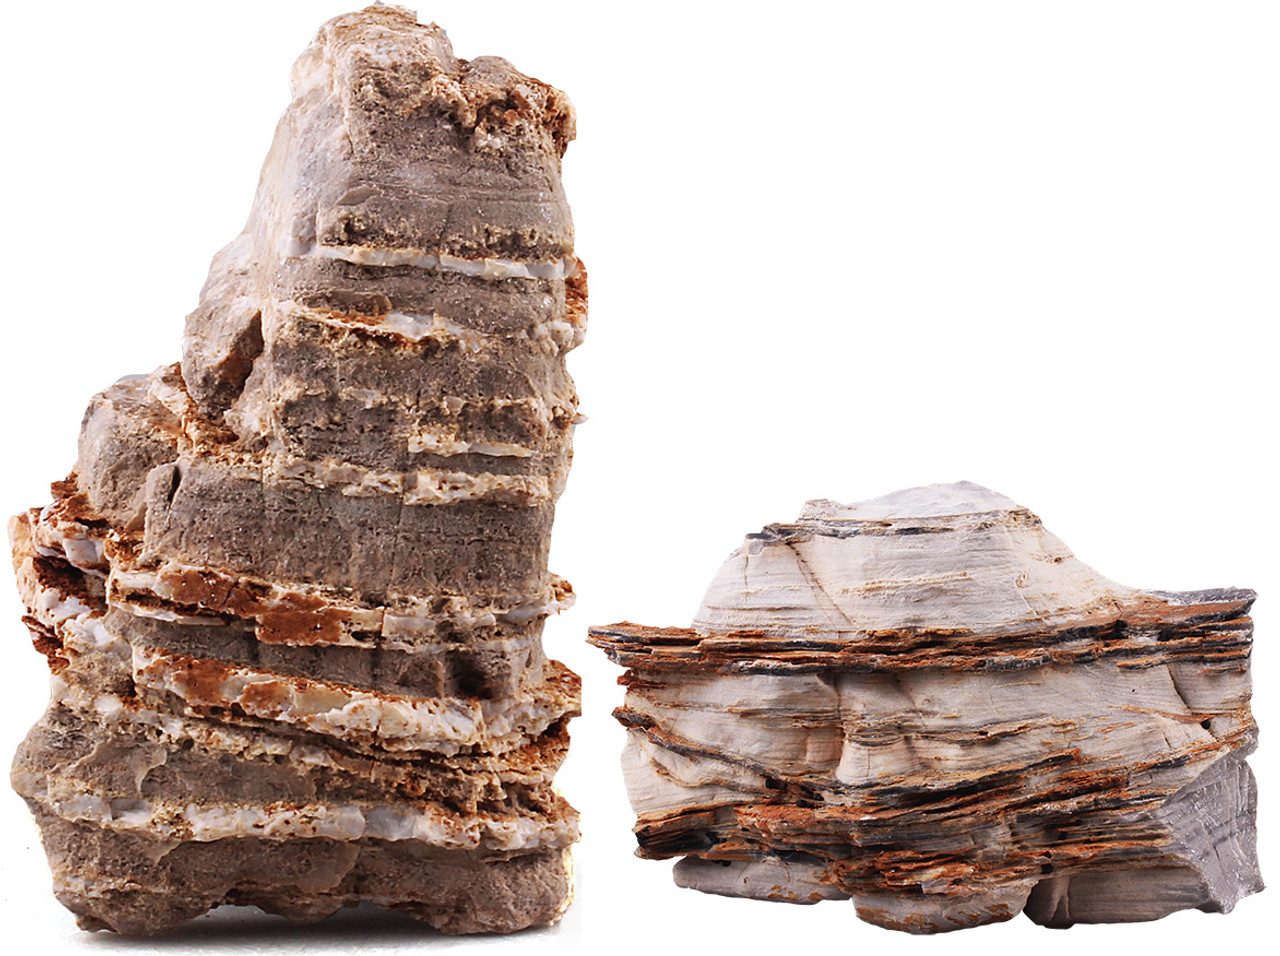 Lifegard Pagoda Crema Textured Stone - 44 Lbs box of LARGE size stones